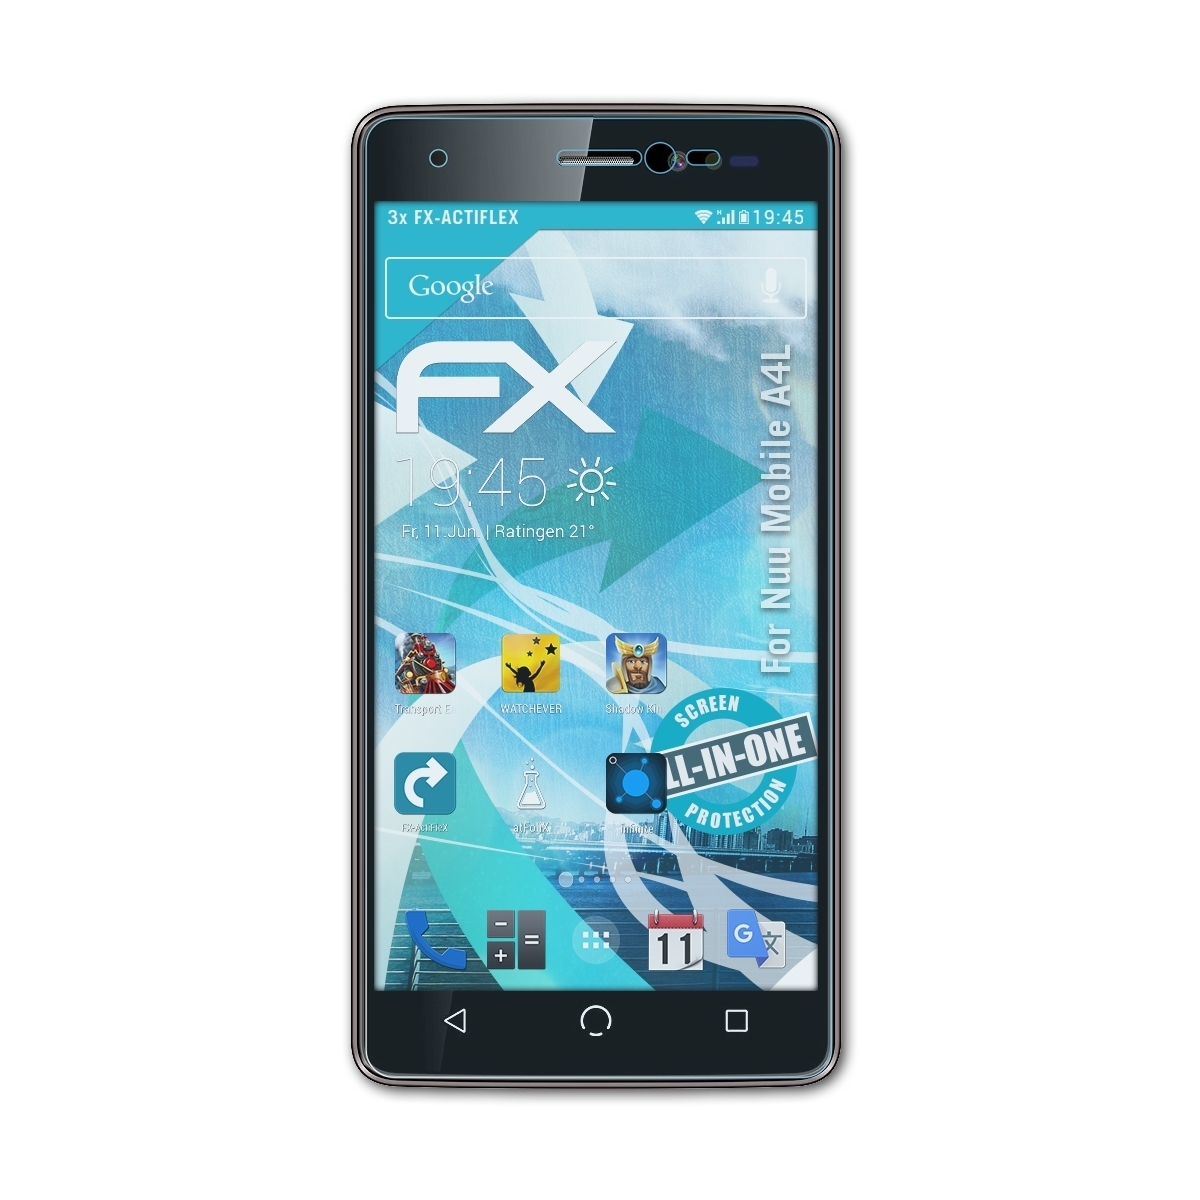 Displayschutz(für 3x FX-ActiFleX A4L) ATFOLIX Mobile Nuu